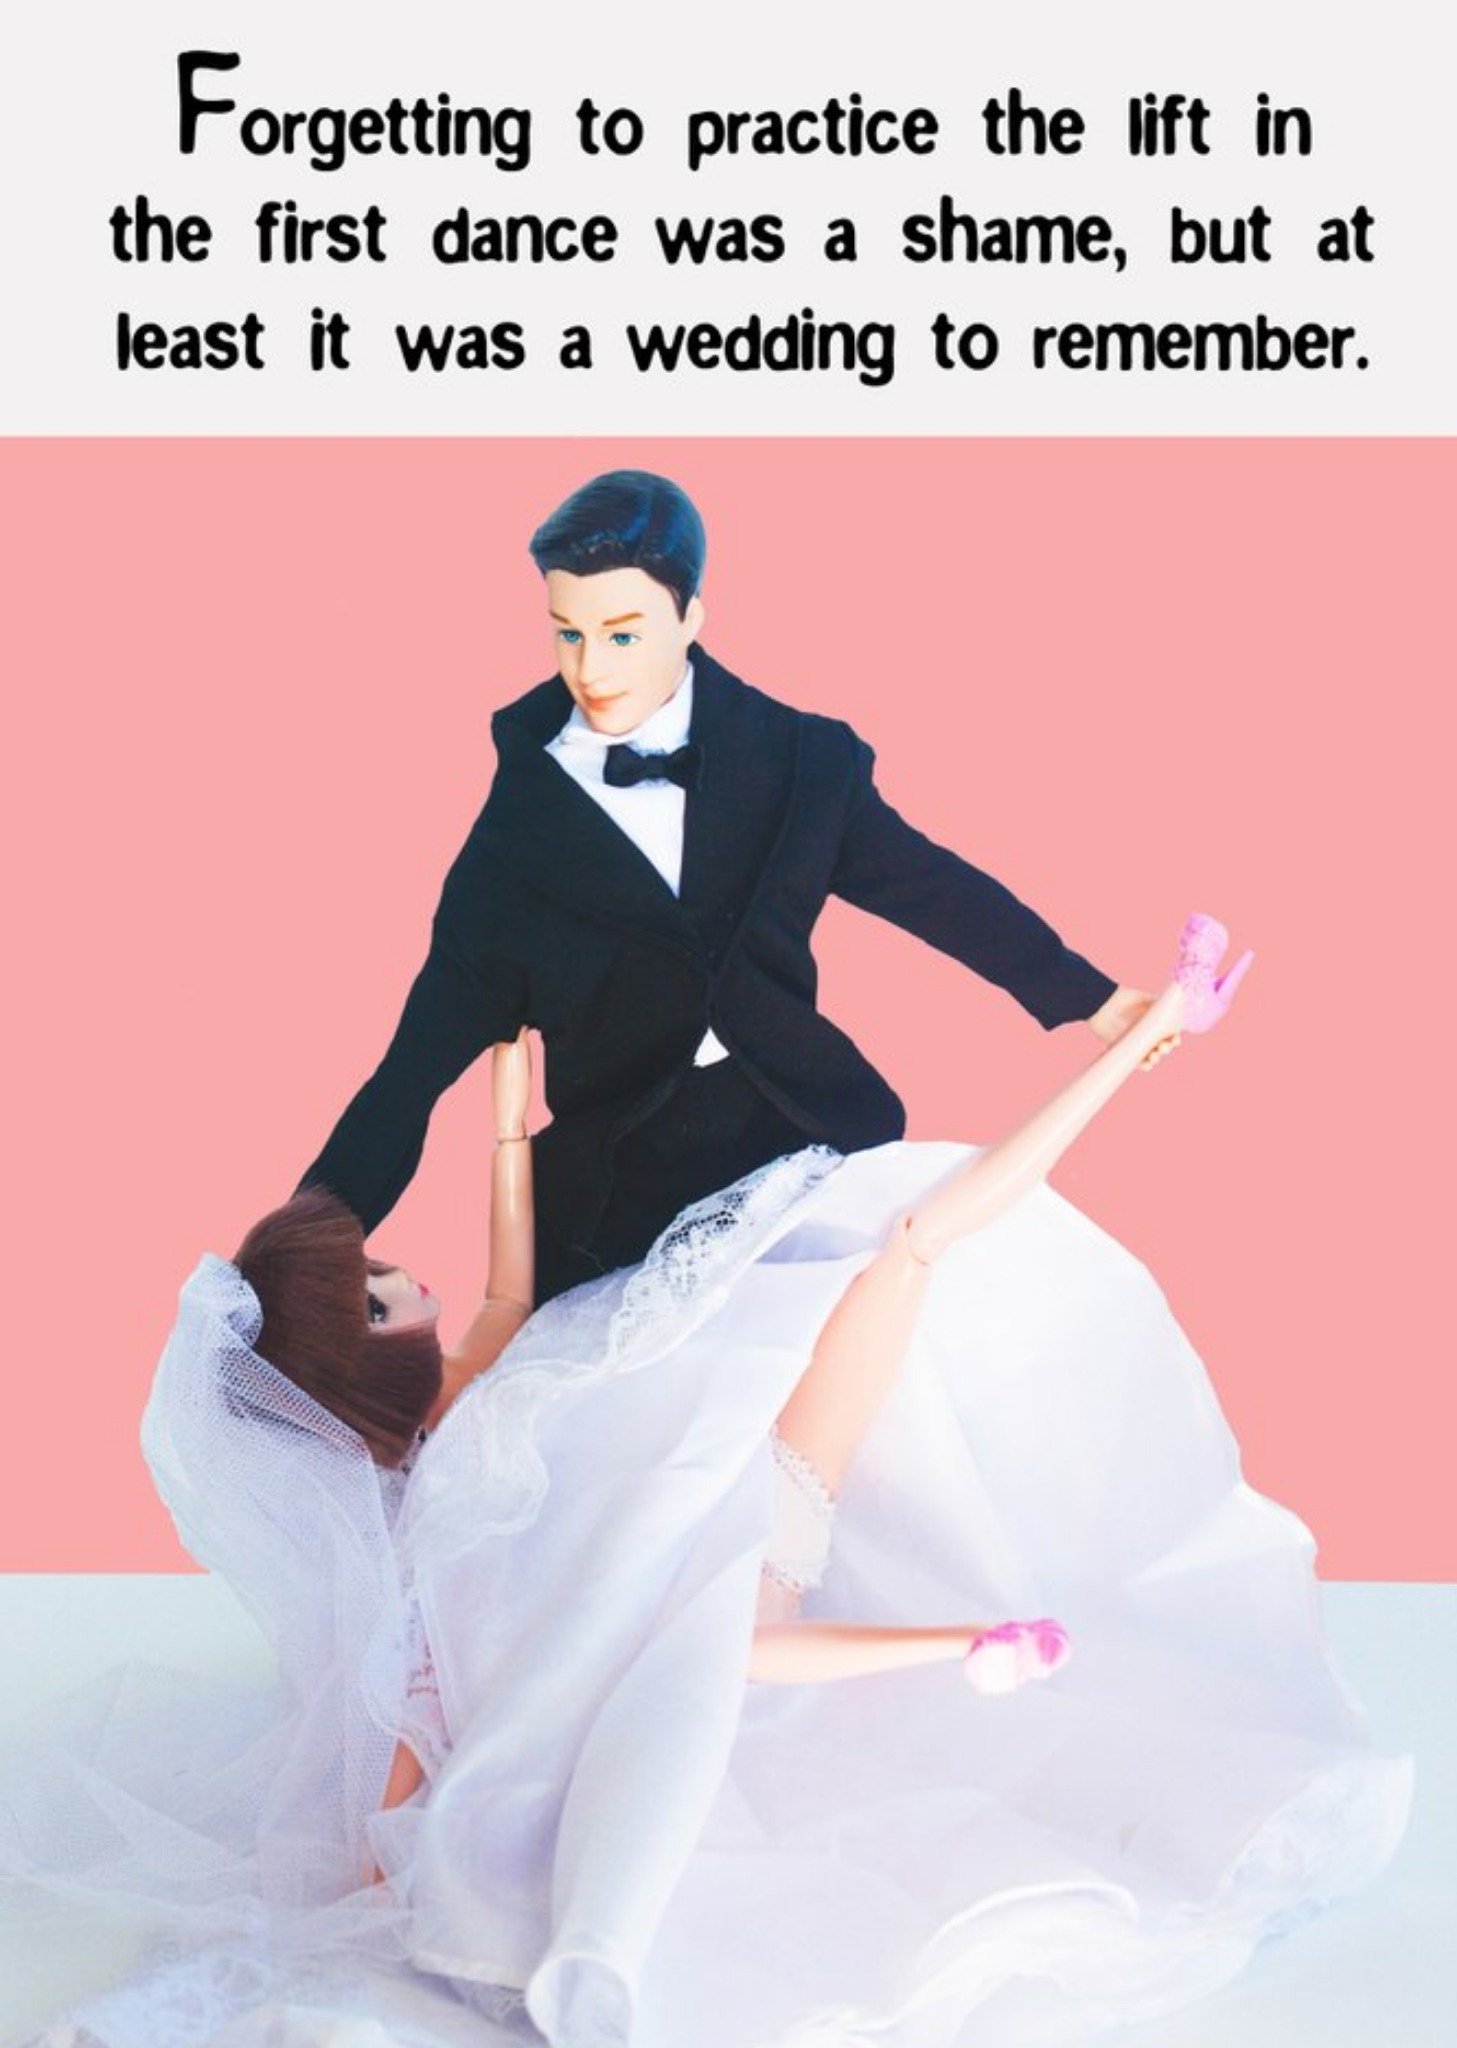 Go La La Photo Humour Male And Female Dolls Wedding Dance Fail Card Ecard